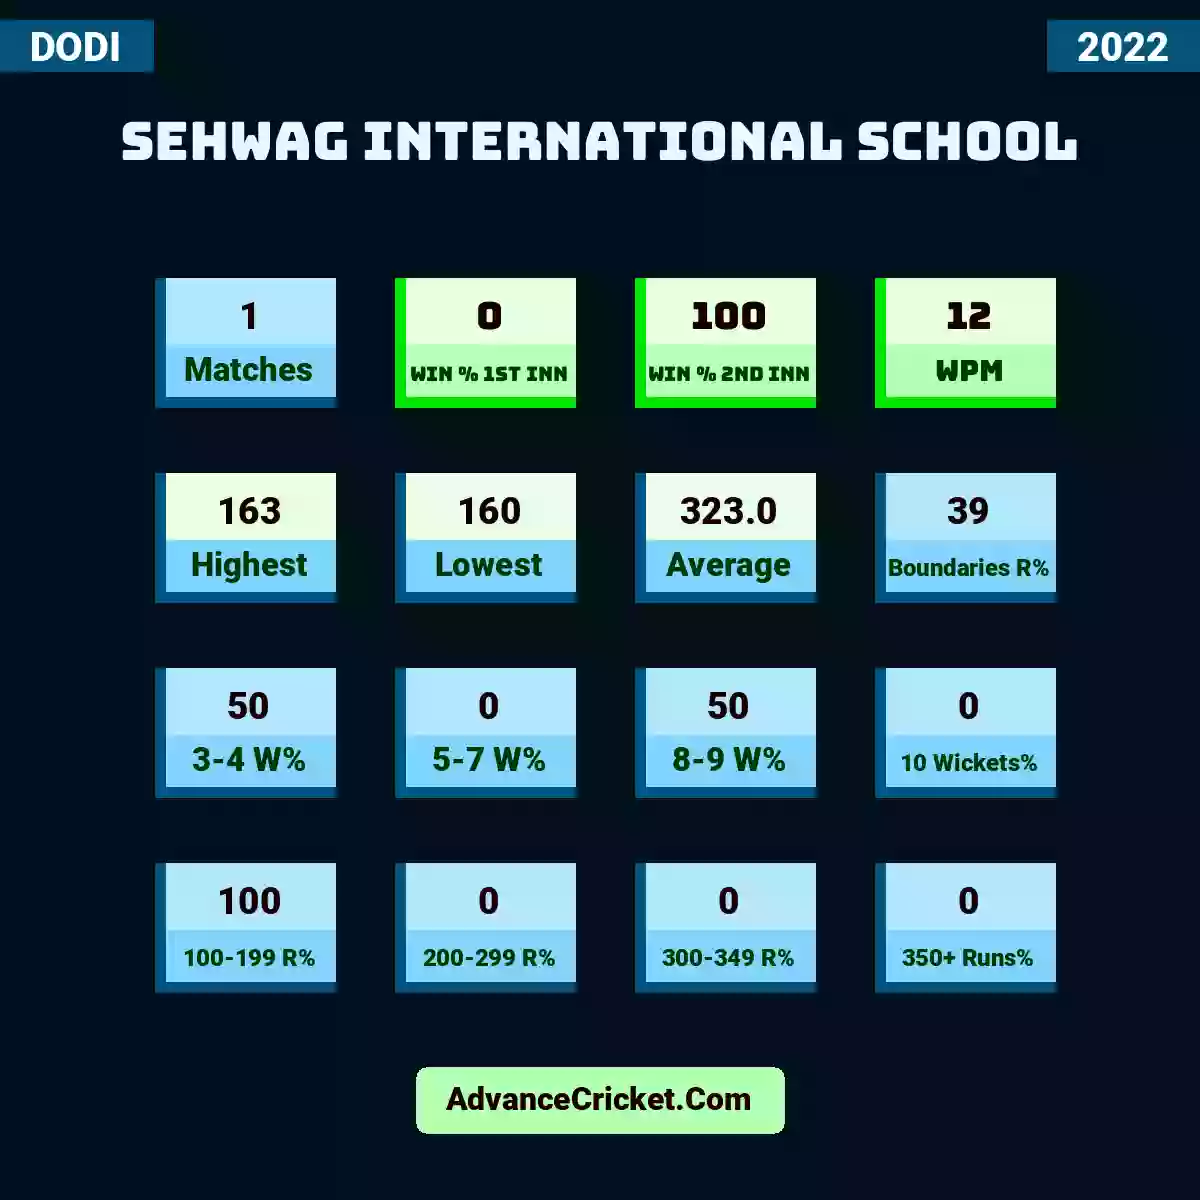 Image showing Sehwag International School with Matches: 1, Win % 1st Inn: 0, Win % 2nd Inn: 100, WPM: 12, Highest: 163, Lowest: 160, Average: 323.0, Boundaries R%: 39, 3-4 W%: 50, 5-7 W%: 0, 8-9 W%: 50, 10 Wickets%: 0, 100-199 R%: 100, 200-299 R%: 0, 300-349 R%: 0, 350+ Runs%: 0.